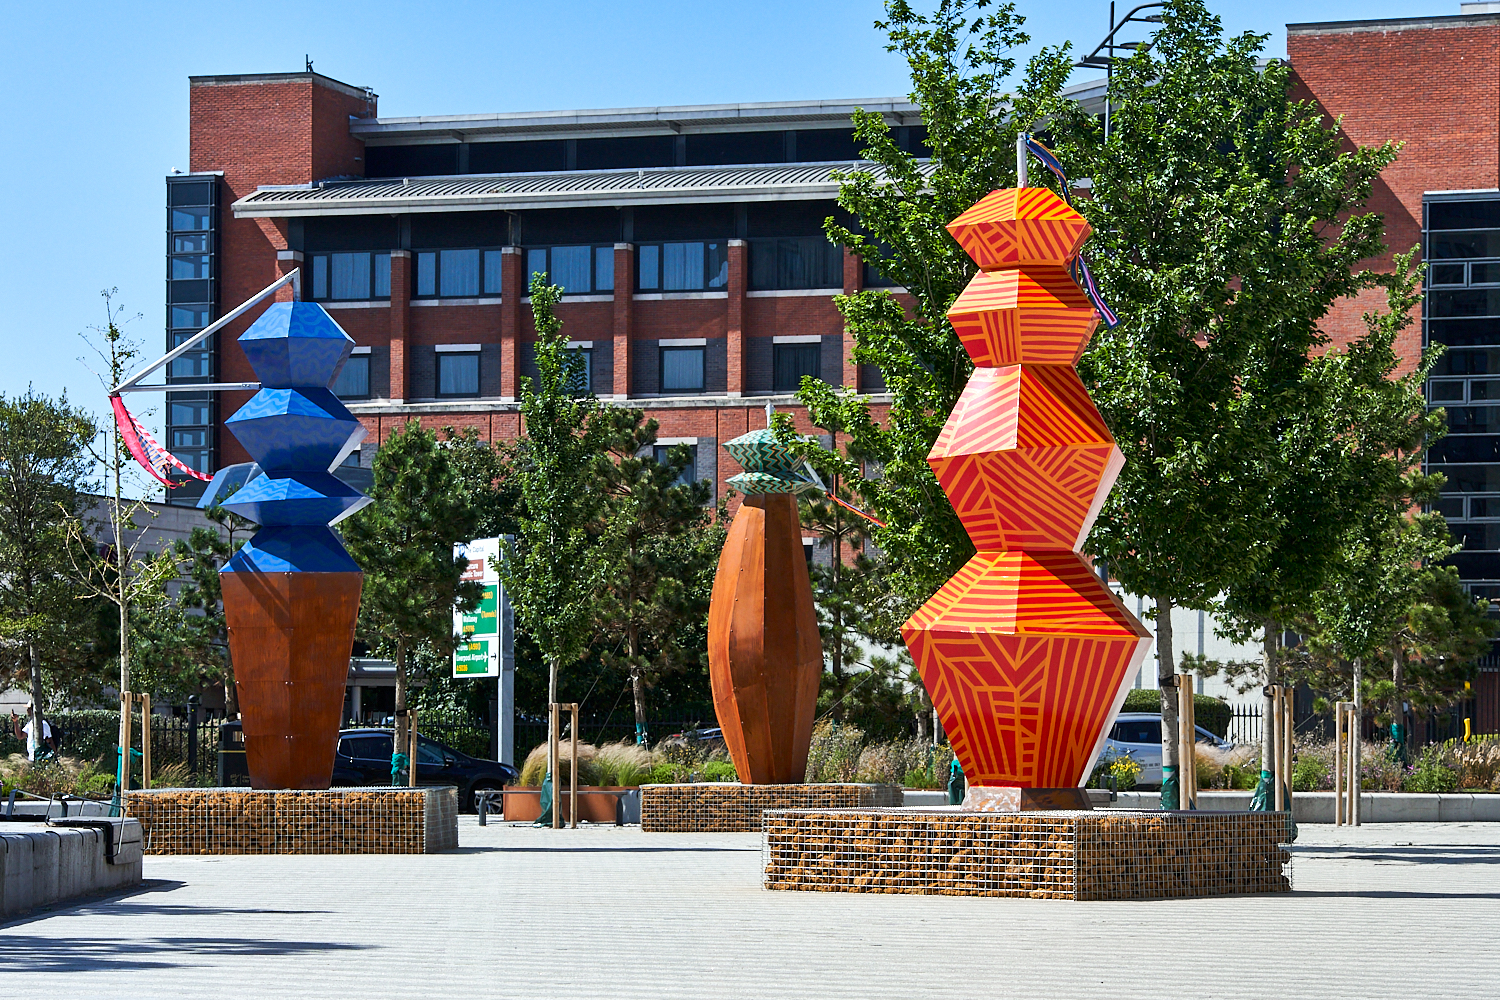 three sculptural art installations on pier head in orange, blue and rust by alicja biala